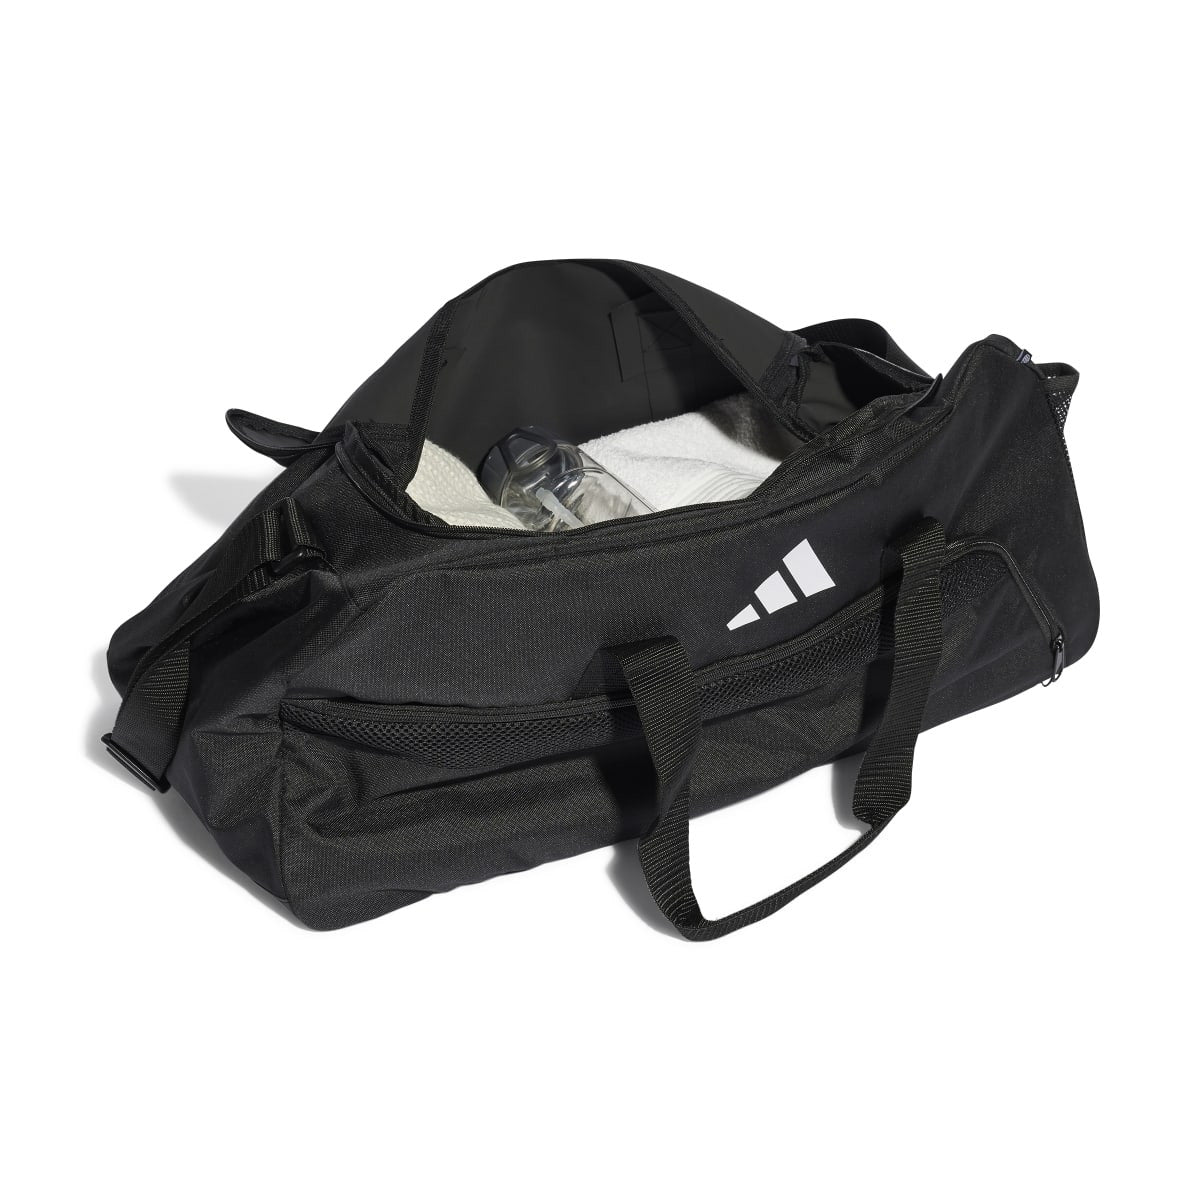 Adidas Tiro League Duffle Bag Large